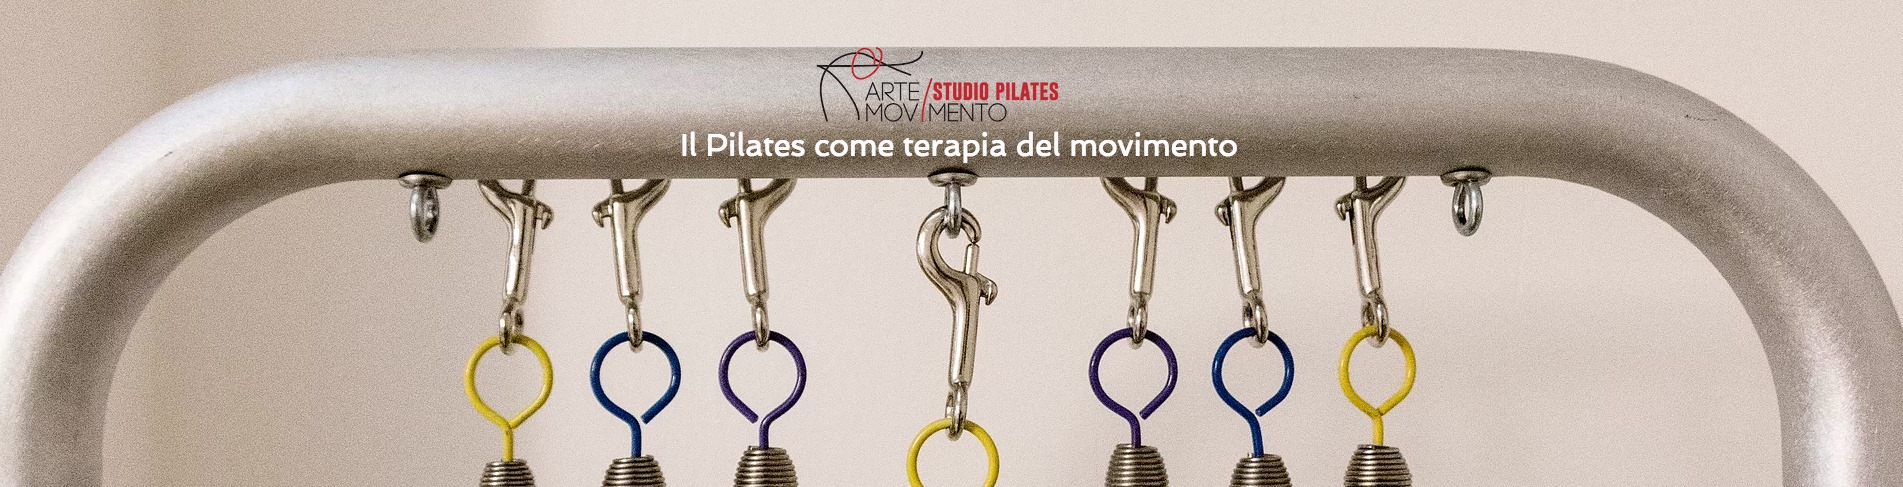 Studio Pilates Roma